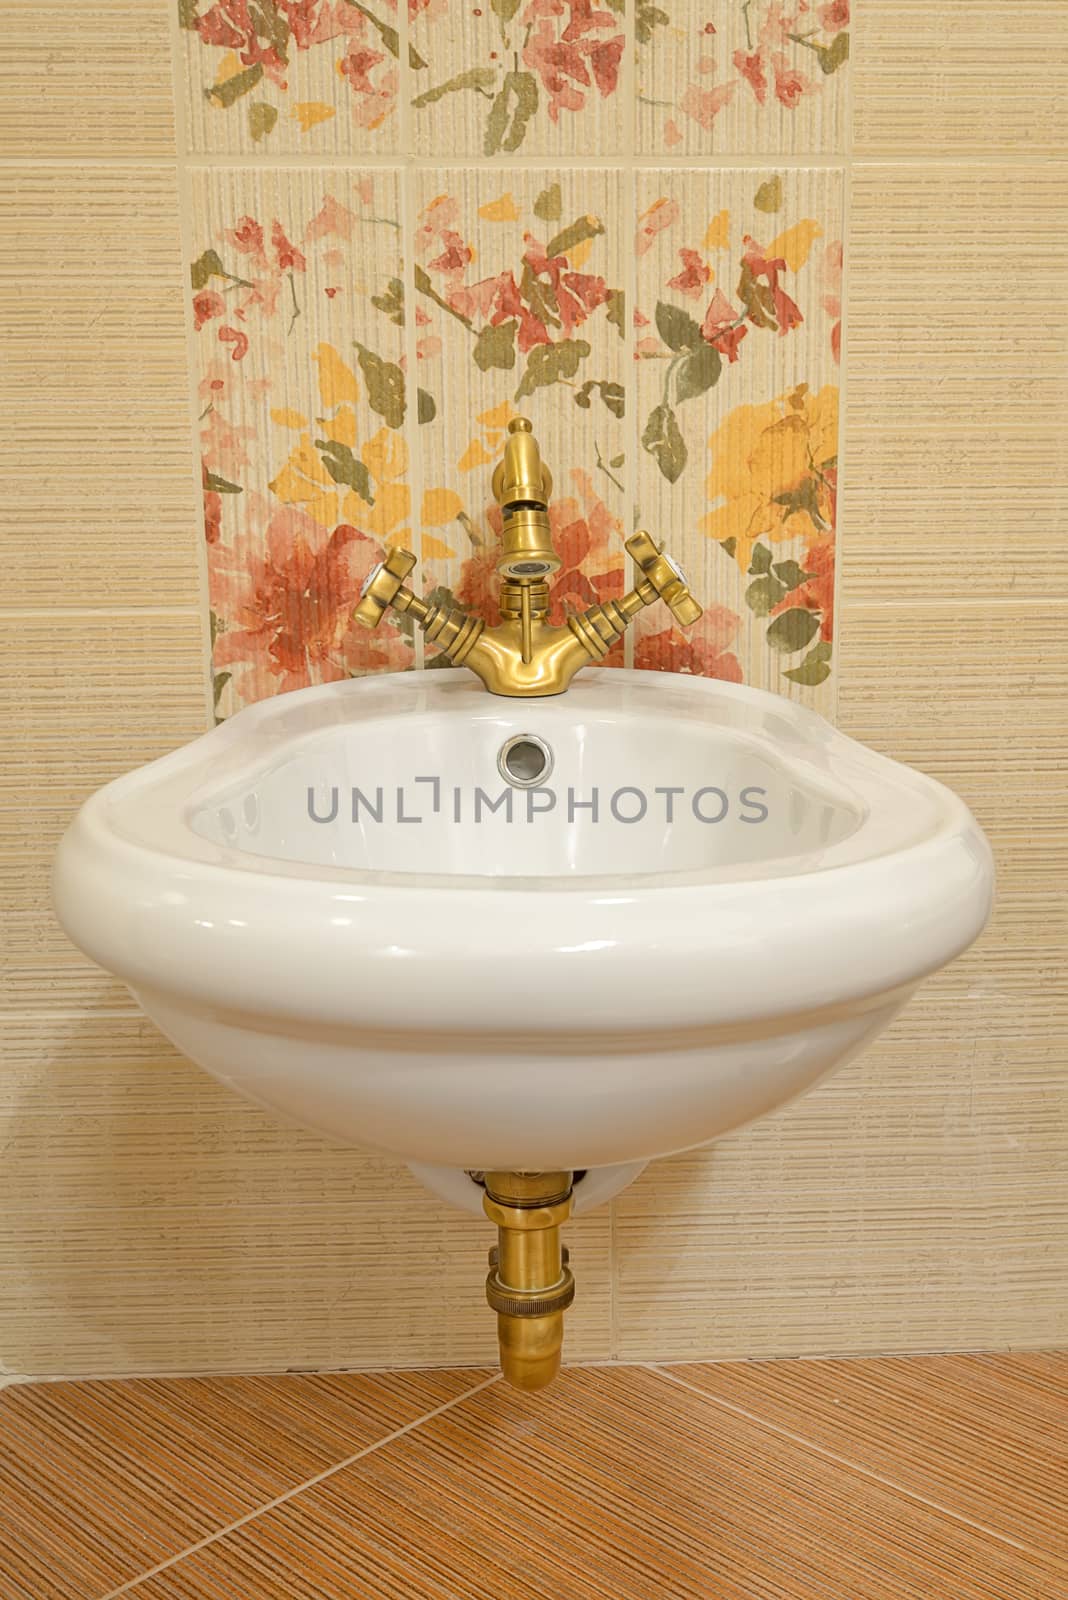 Classic and elegant bidet in bathroom